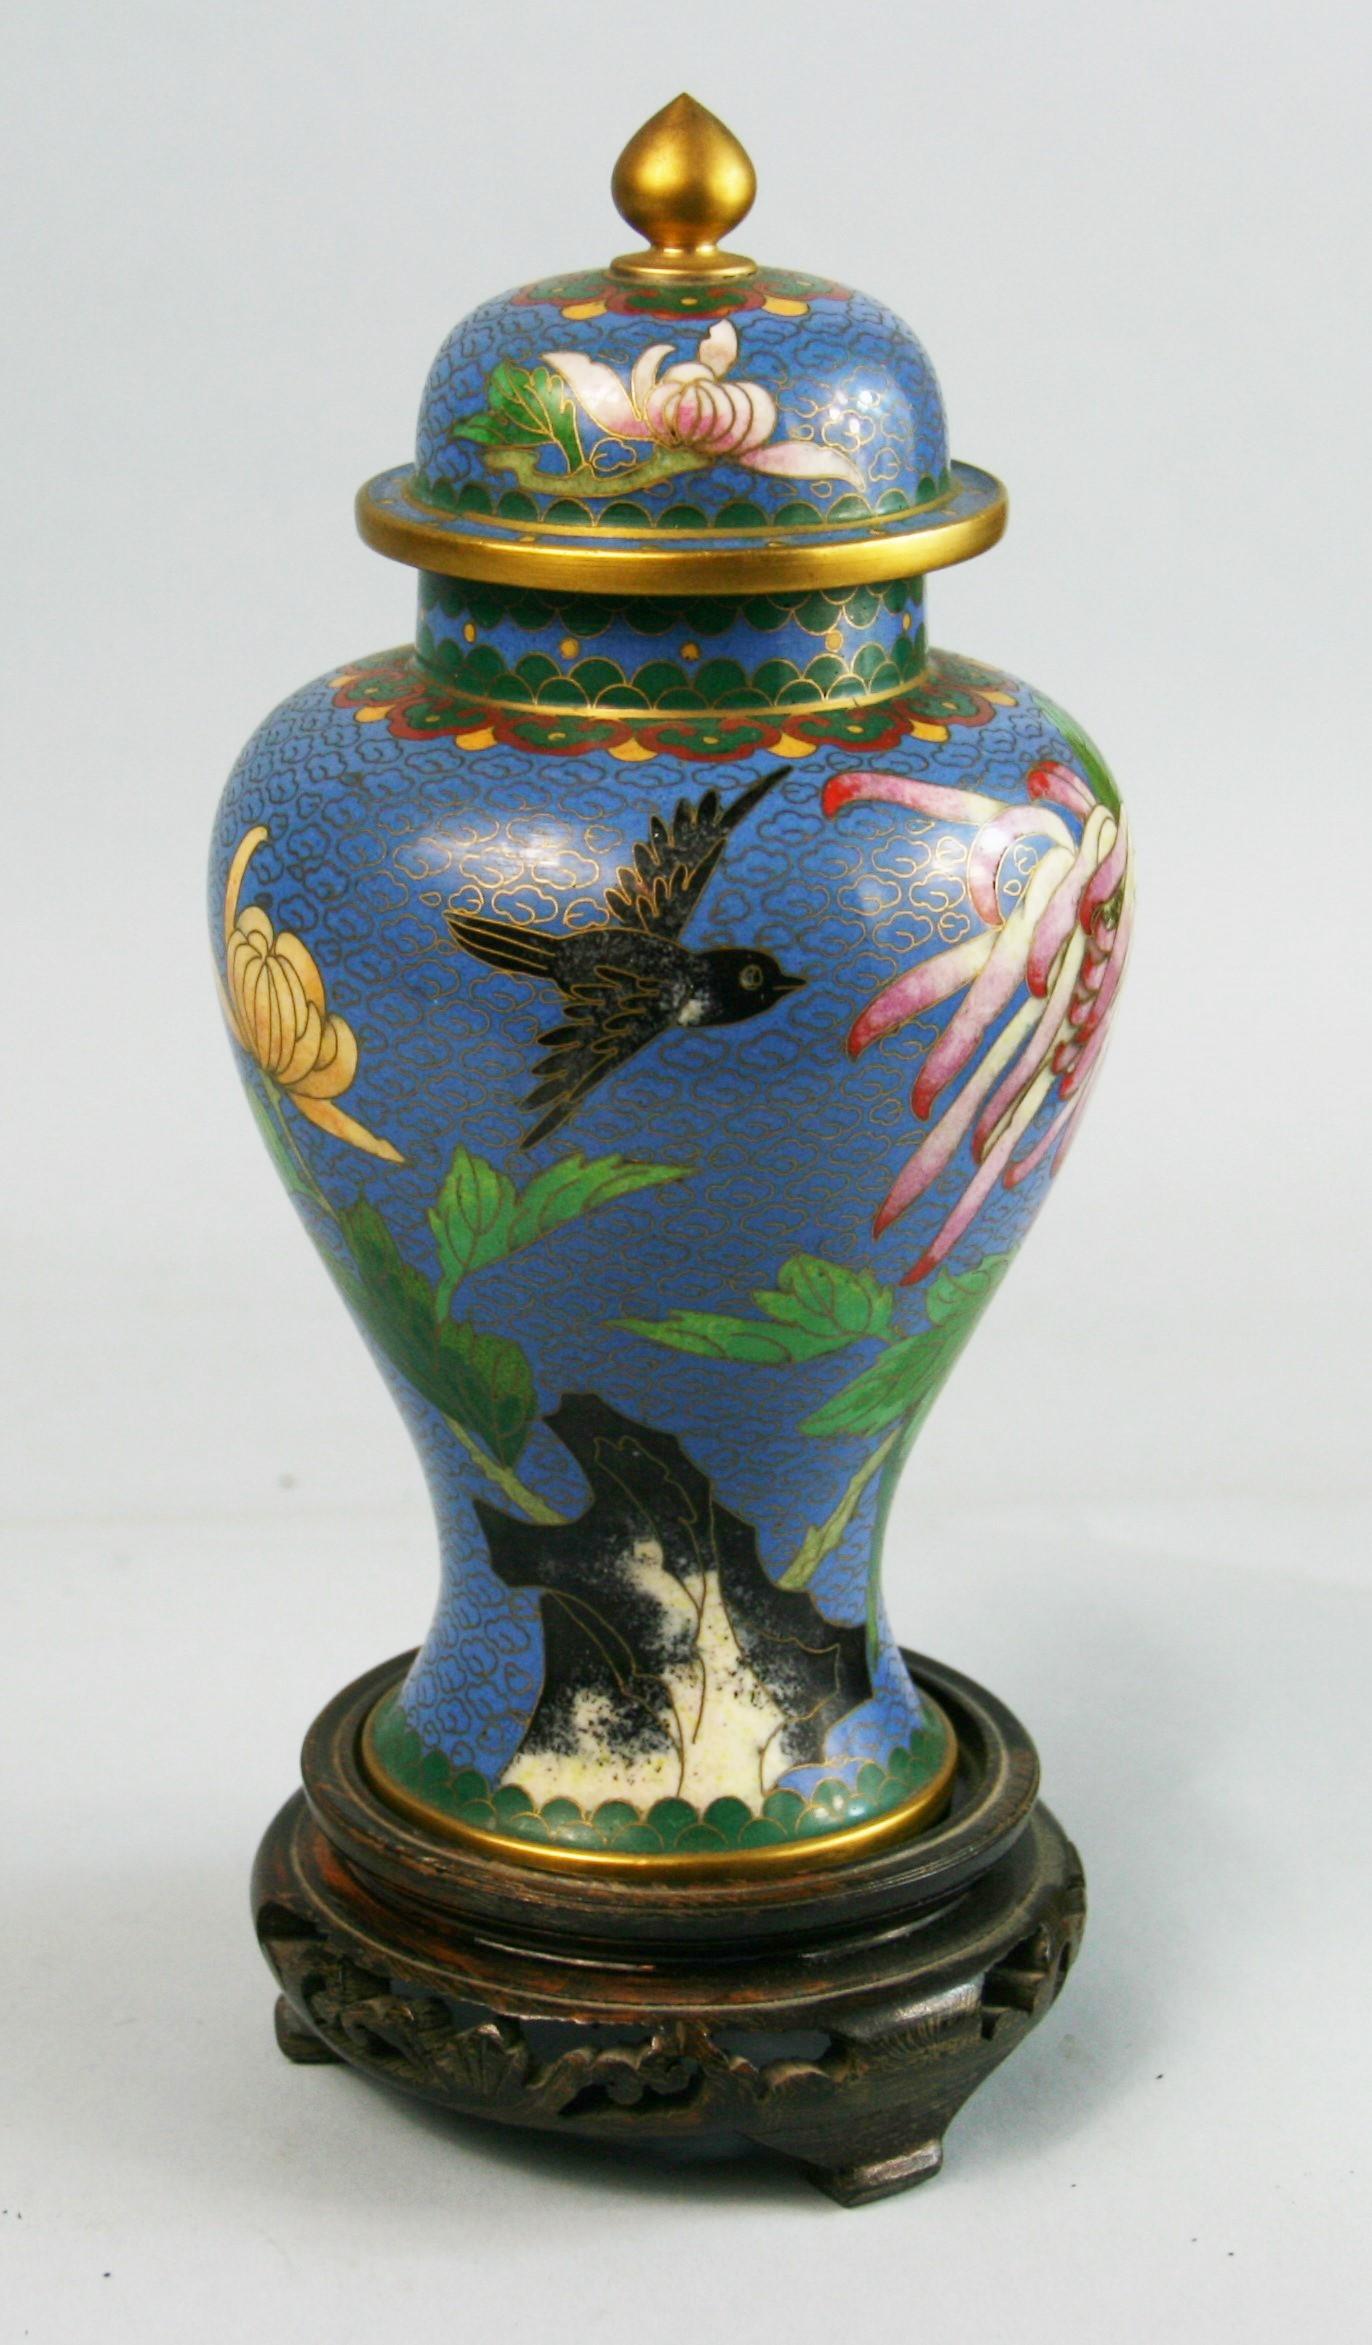 3-675 Cloisonne covered urn with birds and flower details set on a carved wood vase.